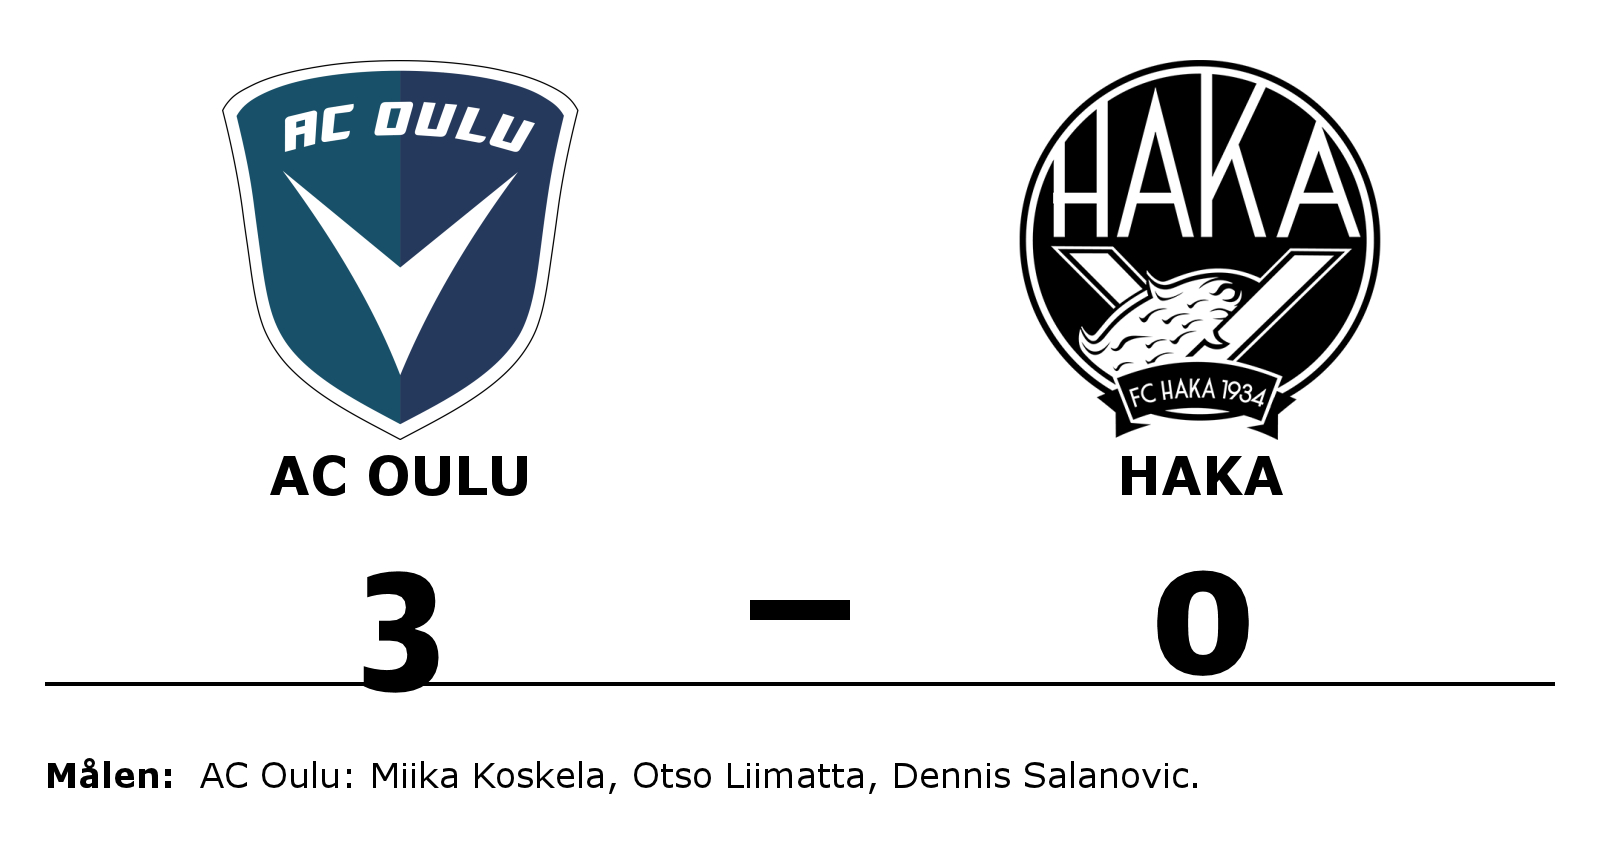 AC Oulu vann mot Haka